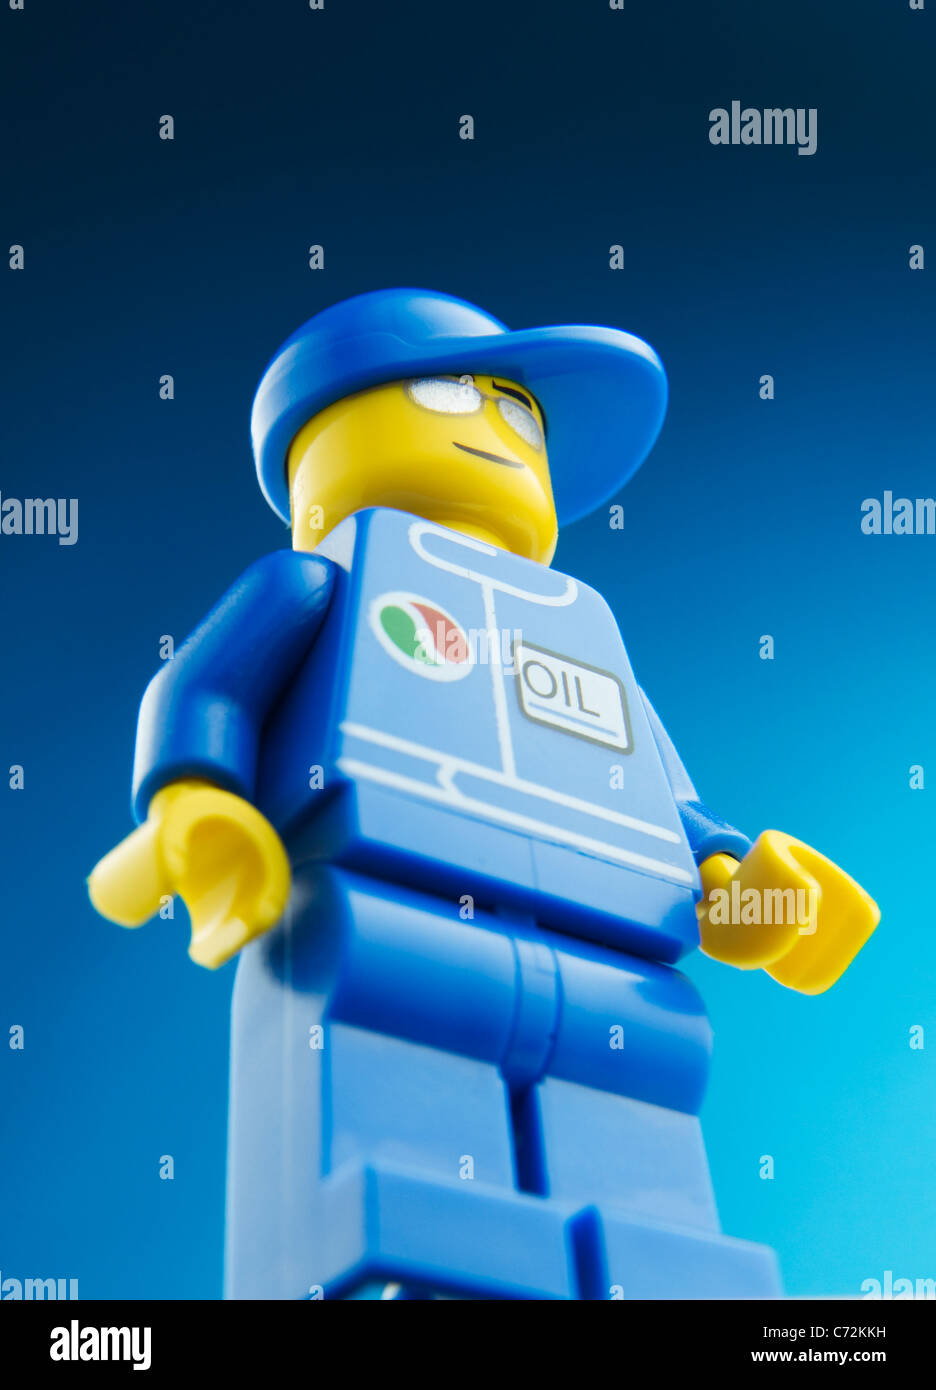 Lego man oil industry Stock Photo - Alamy